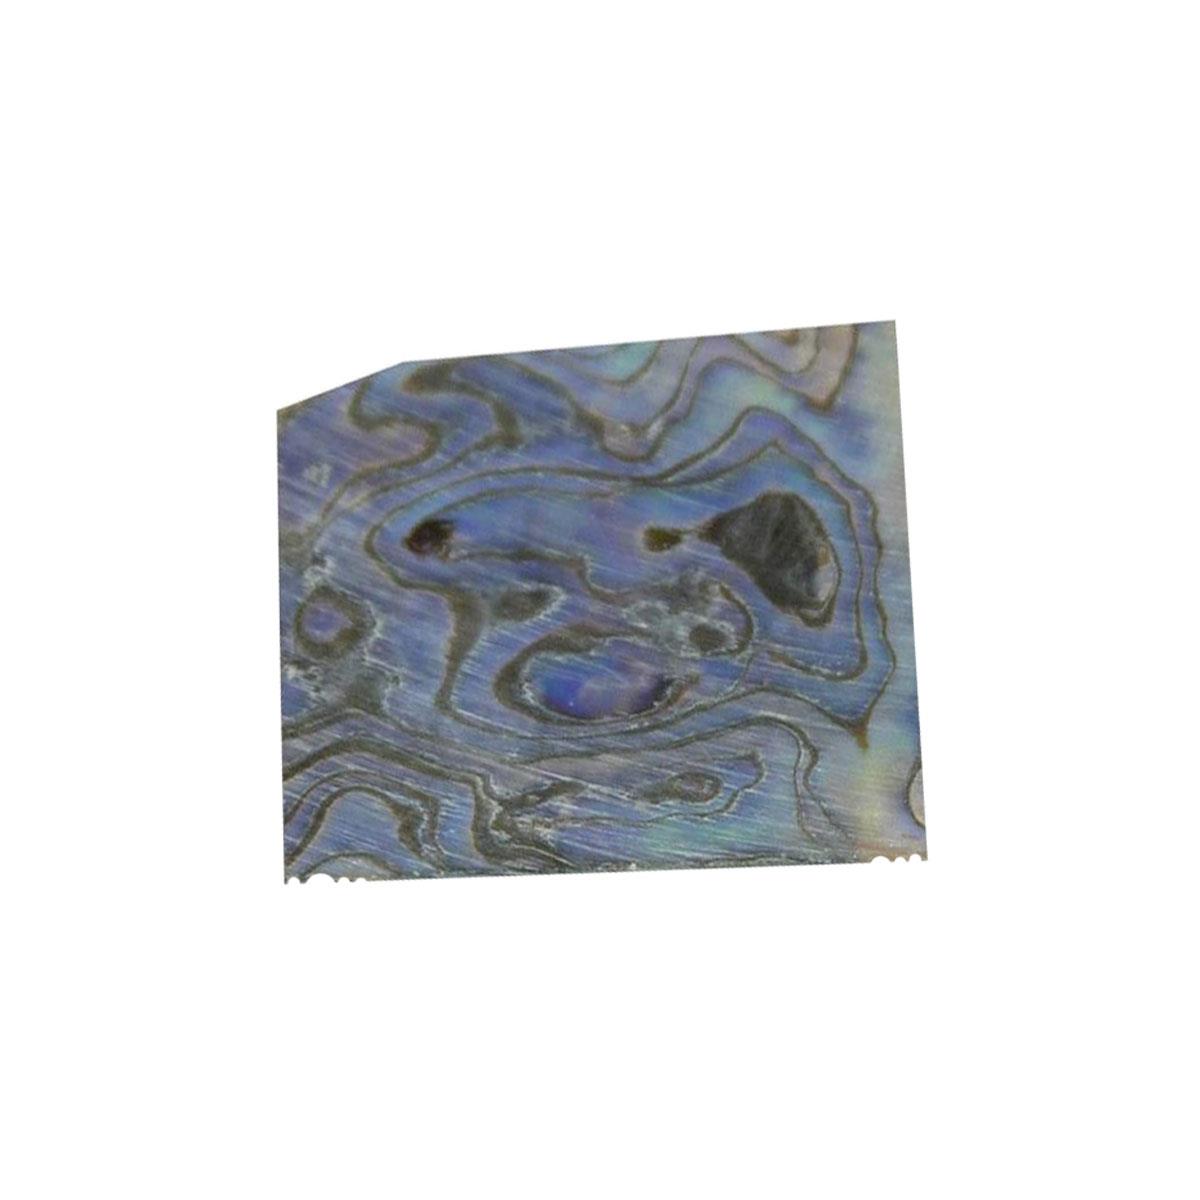 Incudo Paua Abalone Inlay Blank - 25x25x1.5mm (0.98x0.98x0.06")